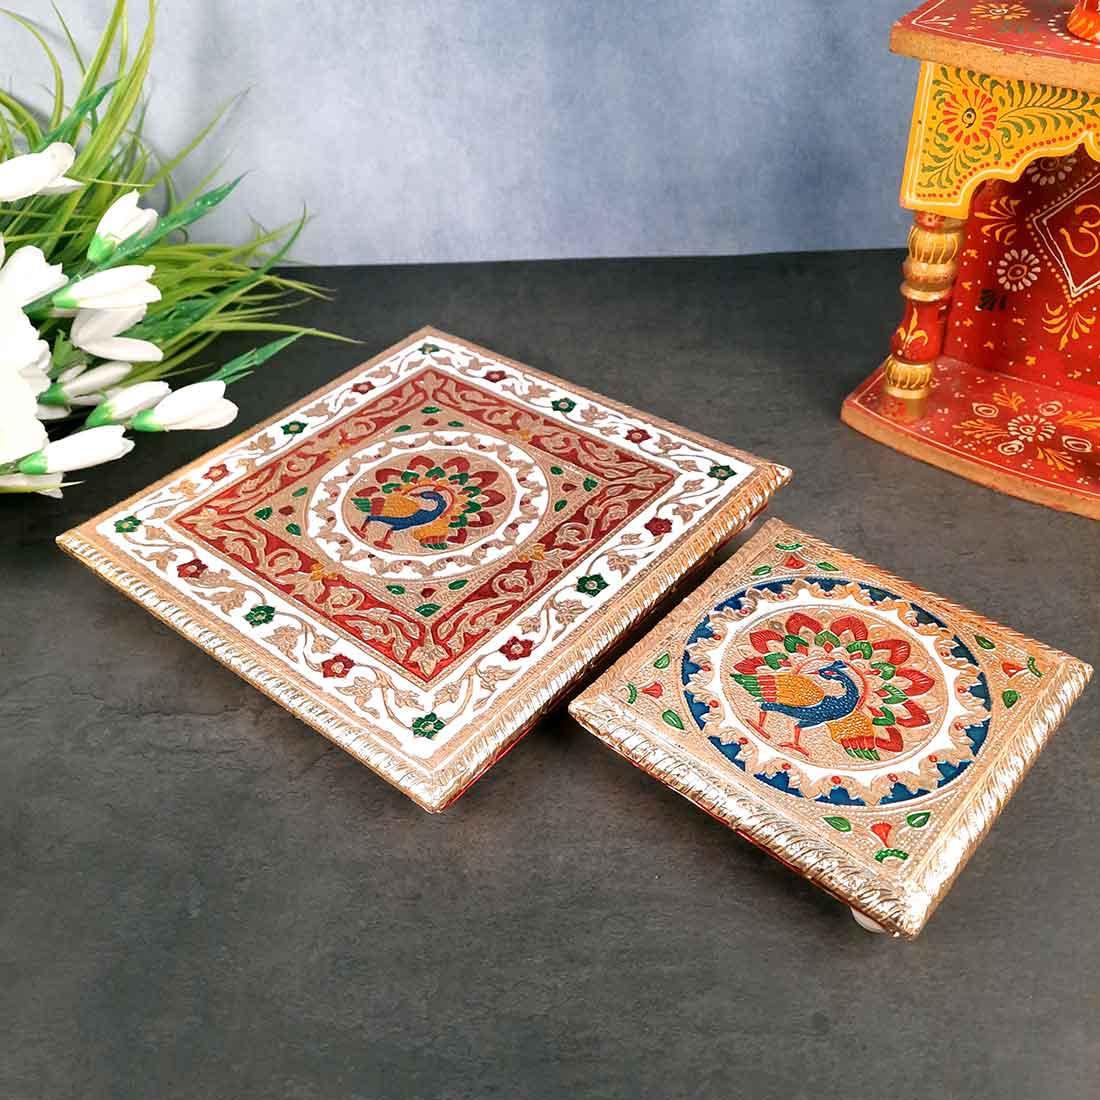 Pooja Chowki Bajot | Wooden Chowki Set - For Pooja, Festivals, Temple & Home Décor - 6, 10 Inch - Apkamart